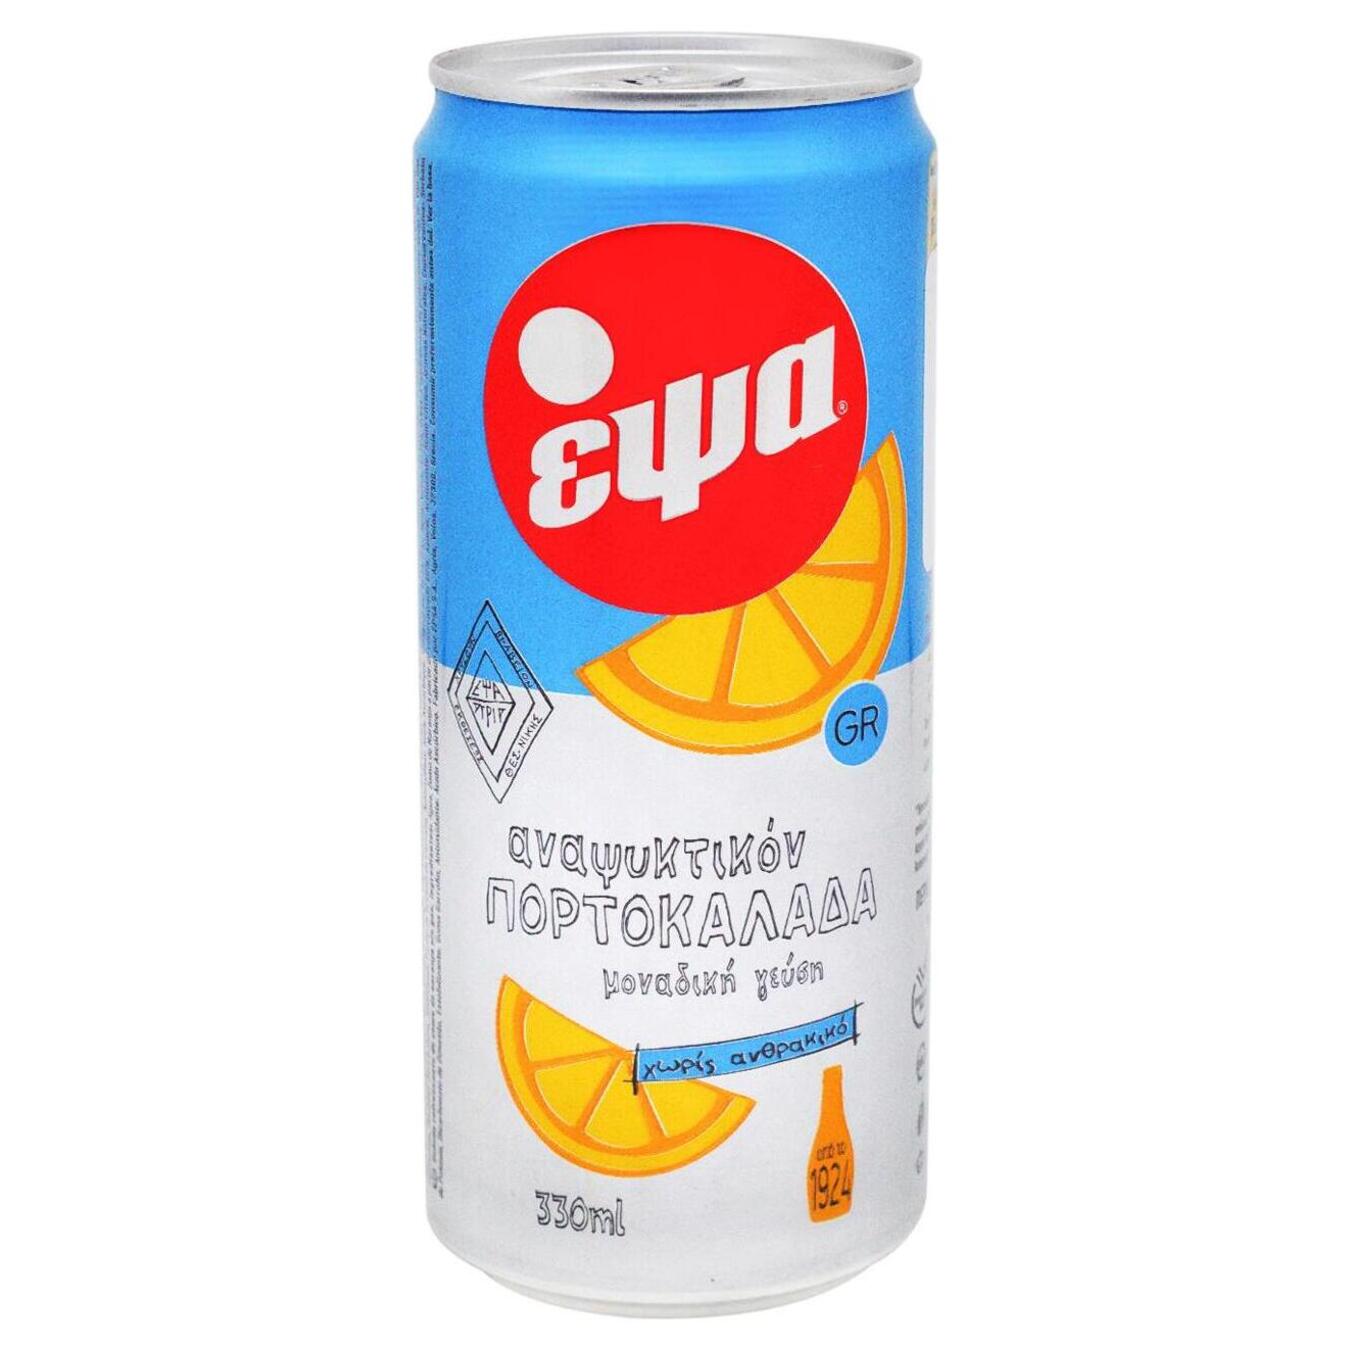 Carbonated drink Epsa Orangeade still 0.33 l iron can